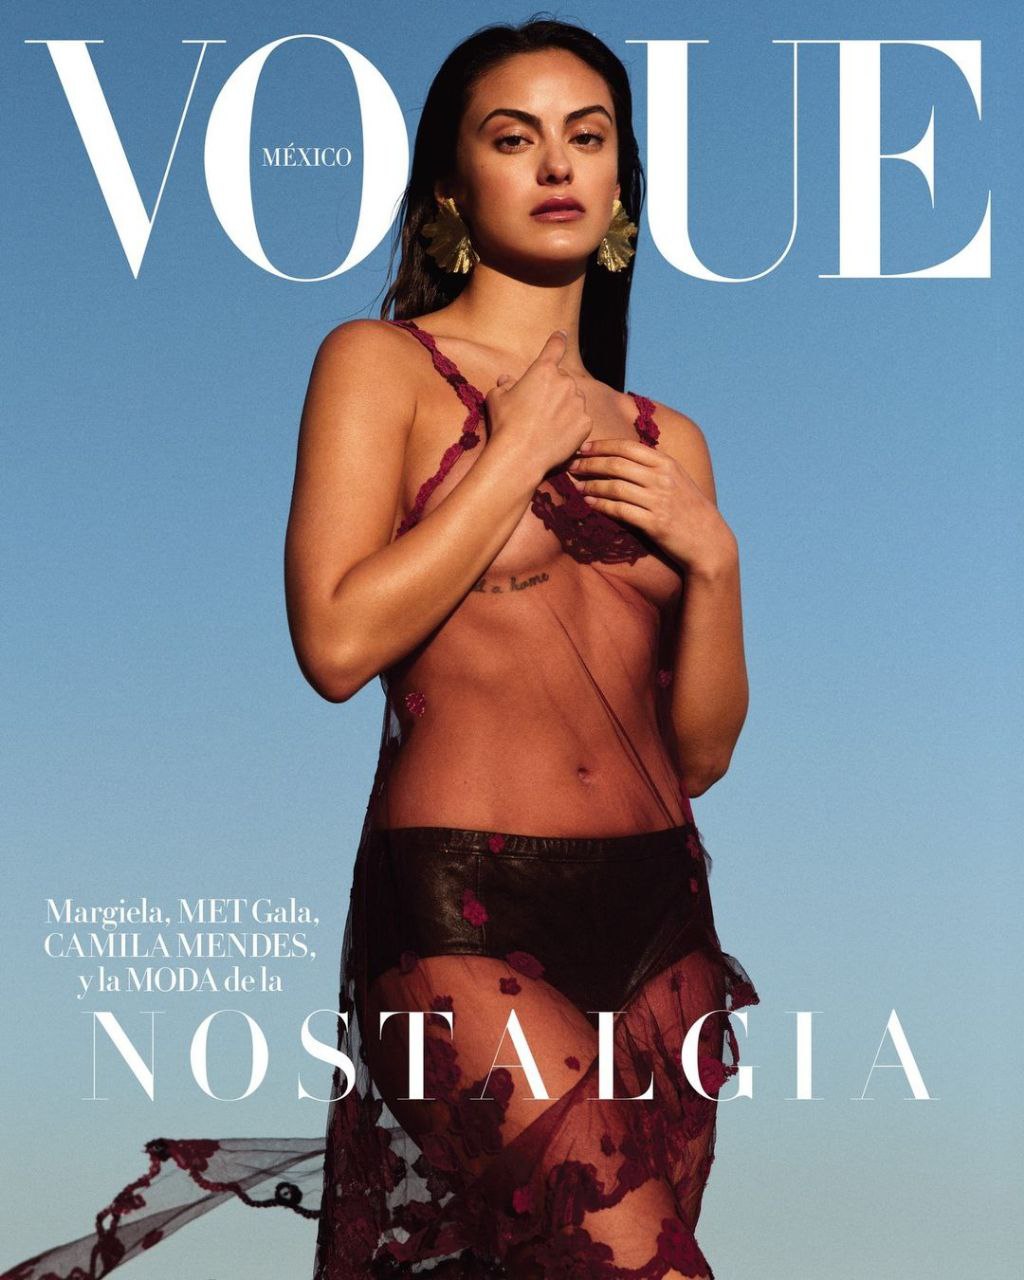 Каміла Мендес в ефектній фотосесії для Vogue Mexico